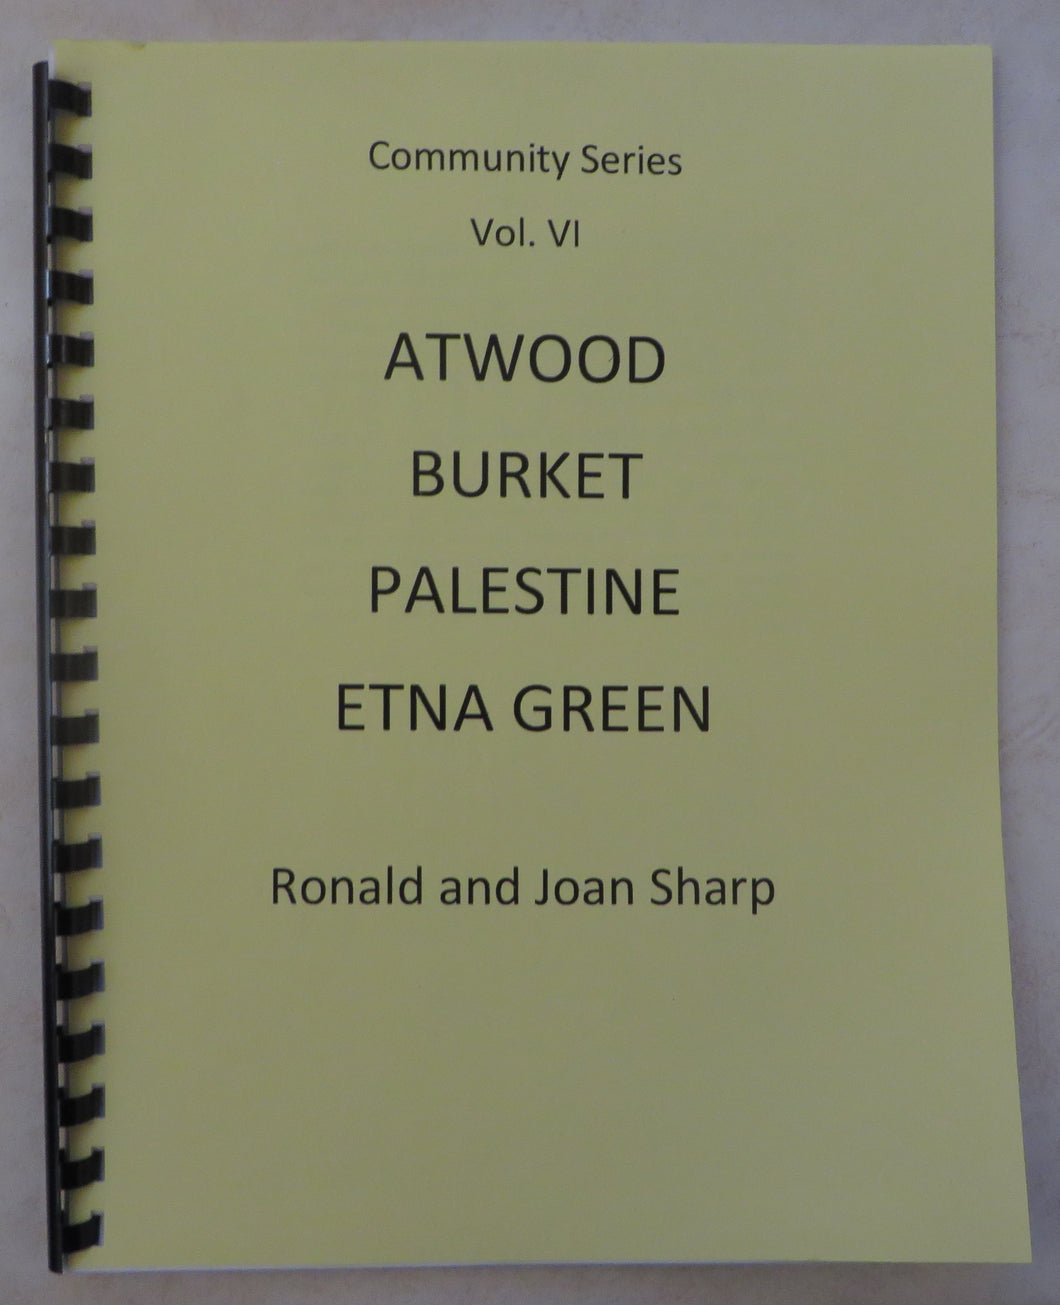 Community Series, Volume 6, Atwood, Burket, Palestine, Etna Green